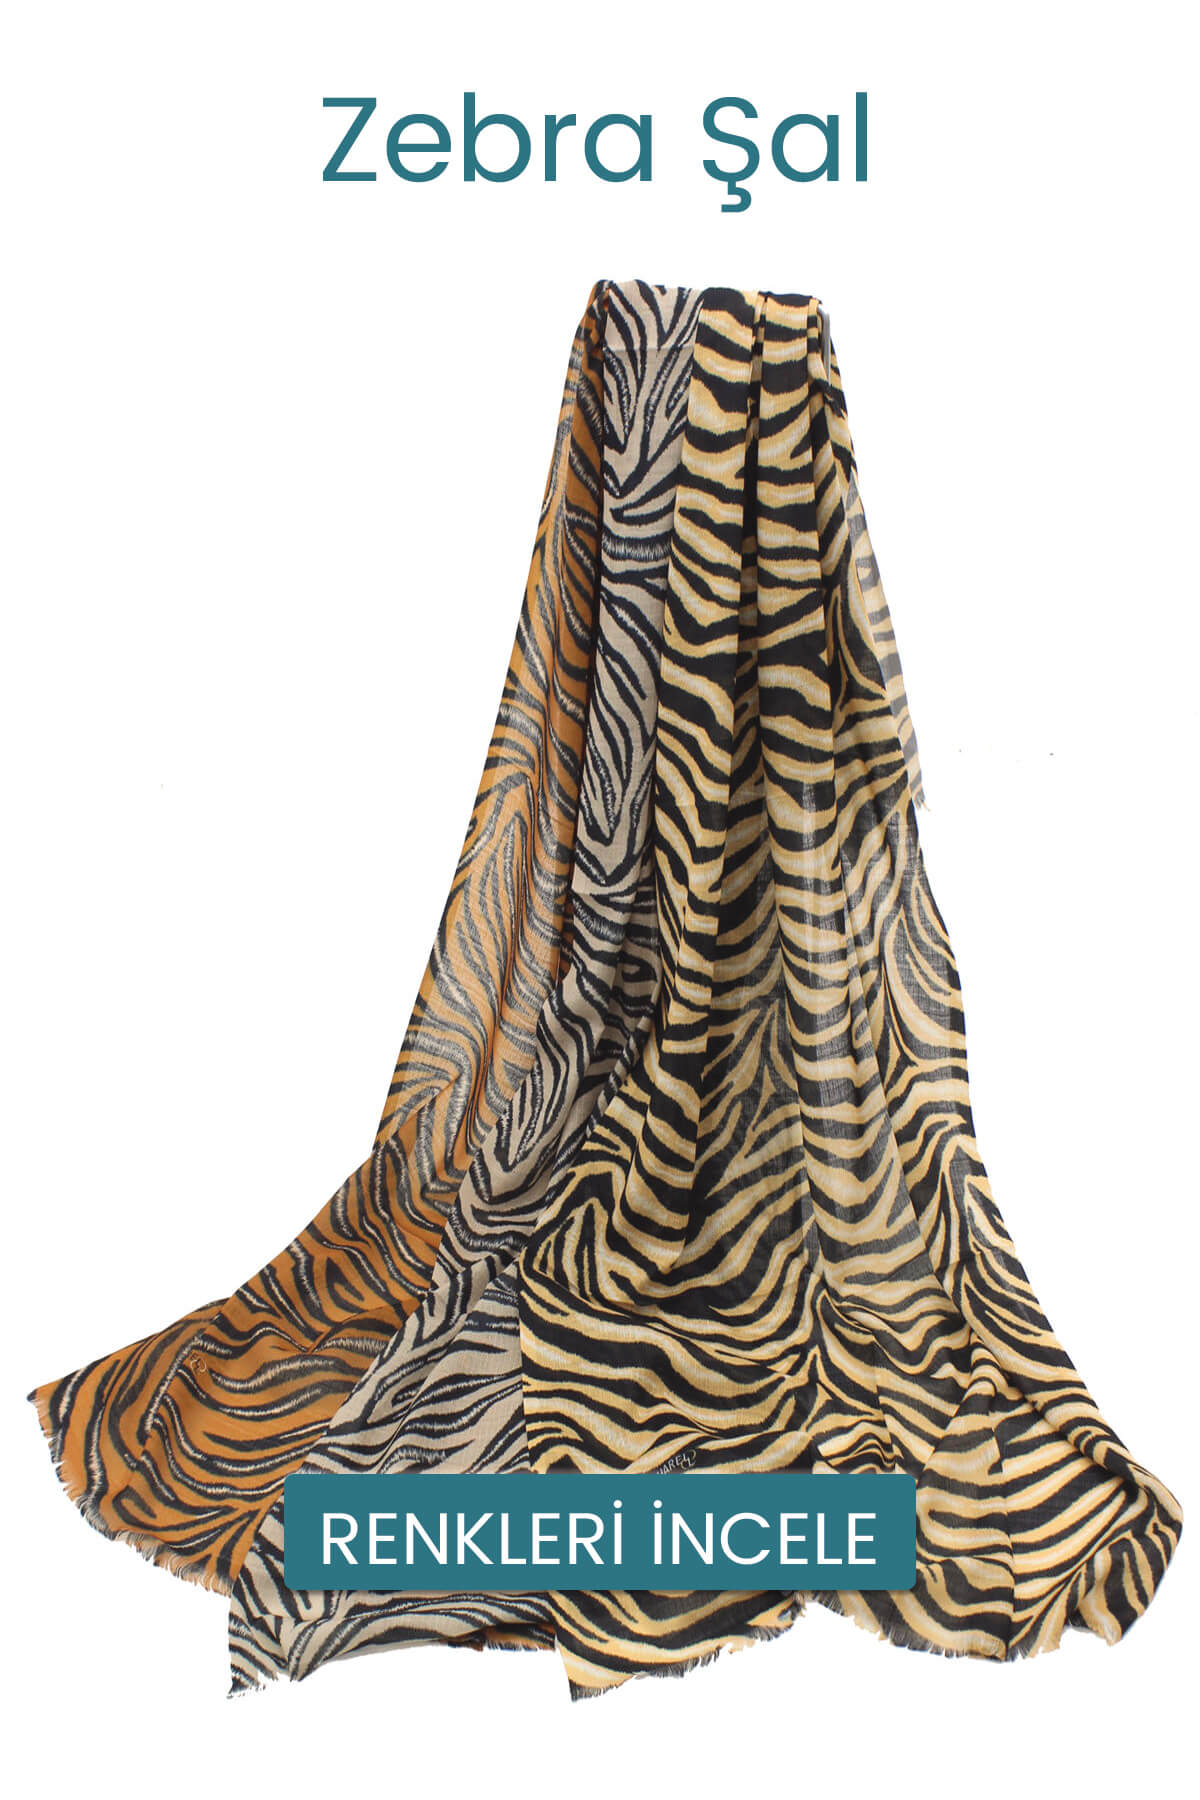 zebra-sal-tekstilland